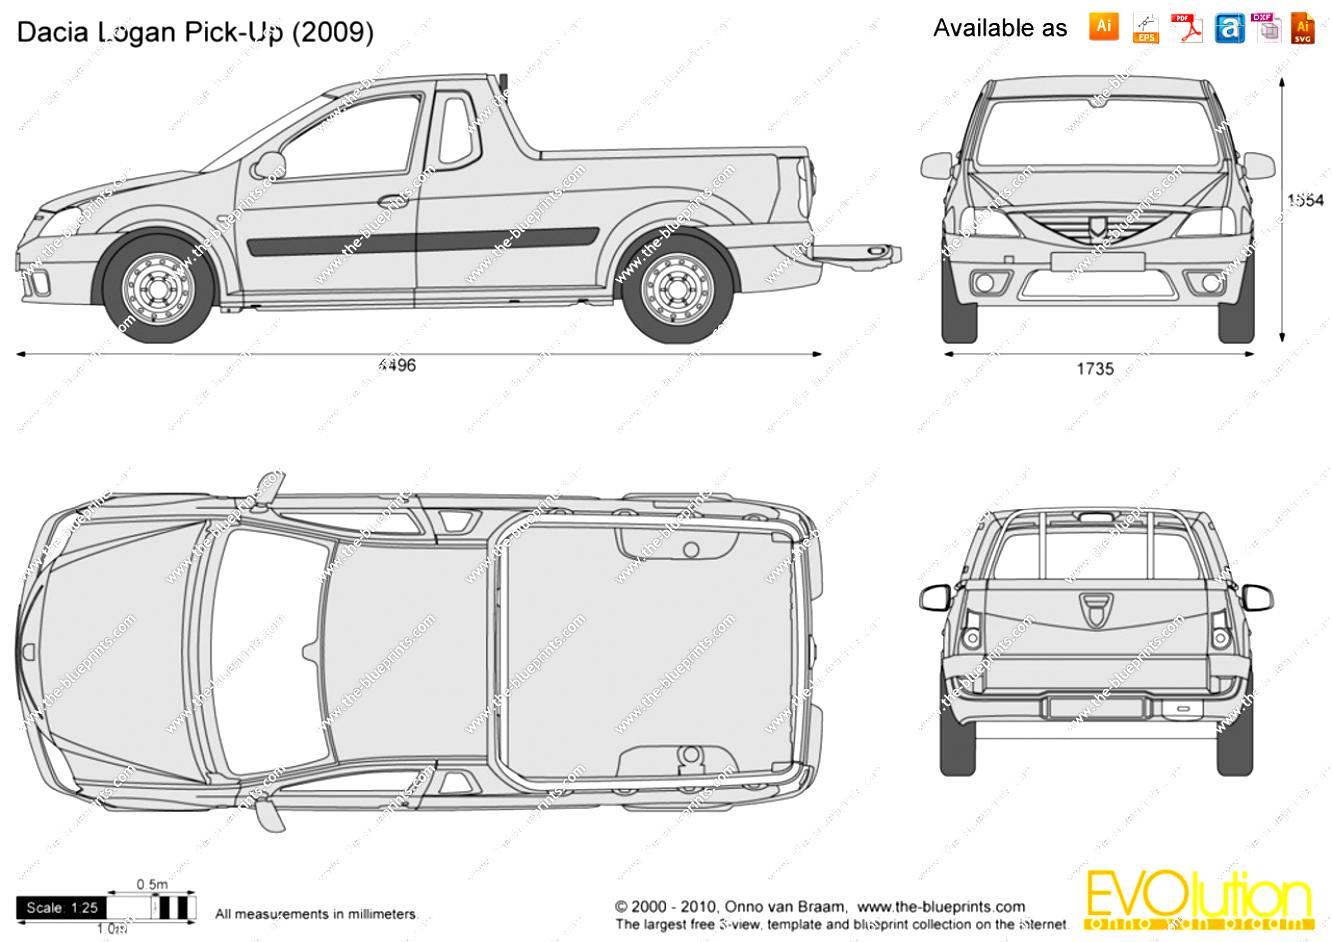 Dacia Pick-Up 2007 #75